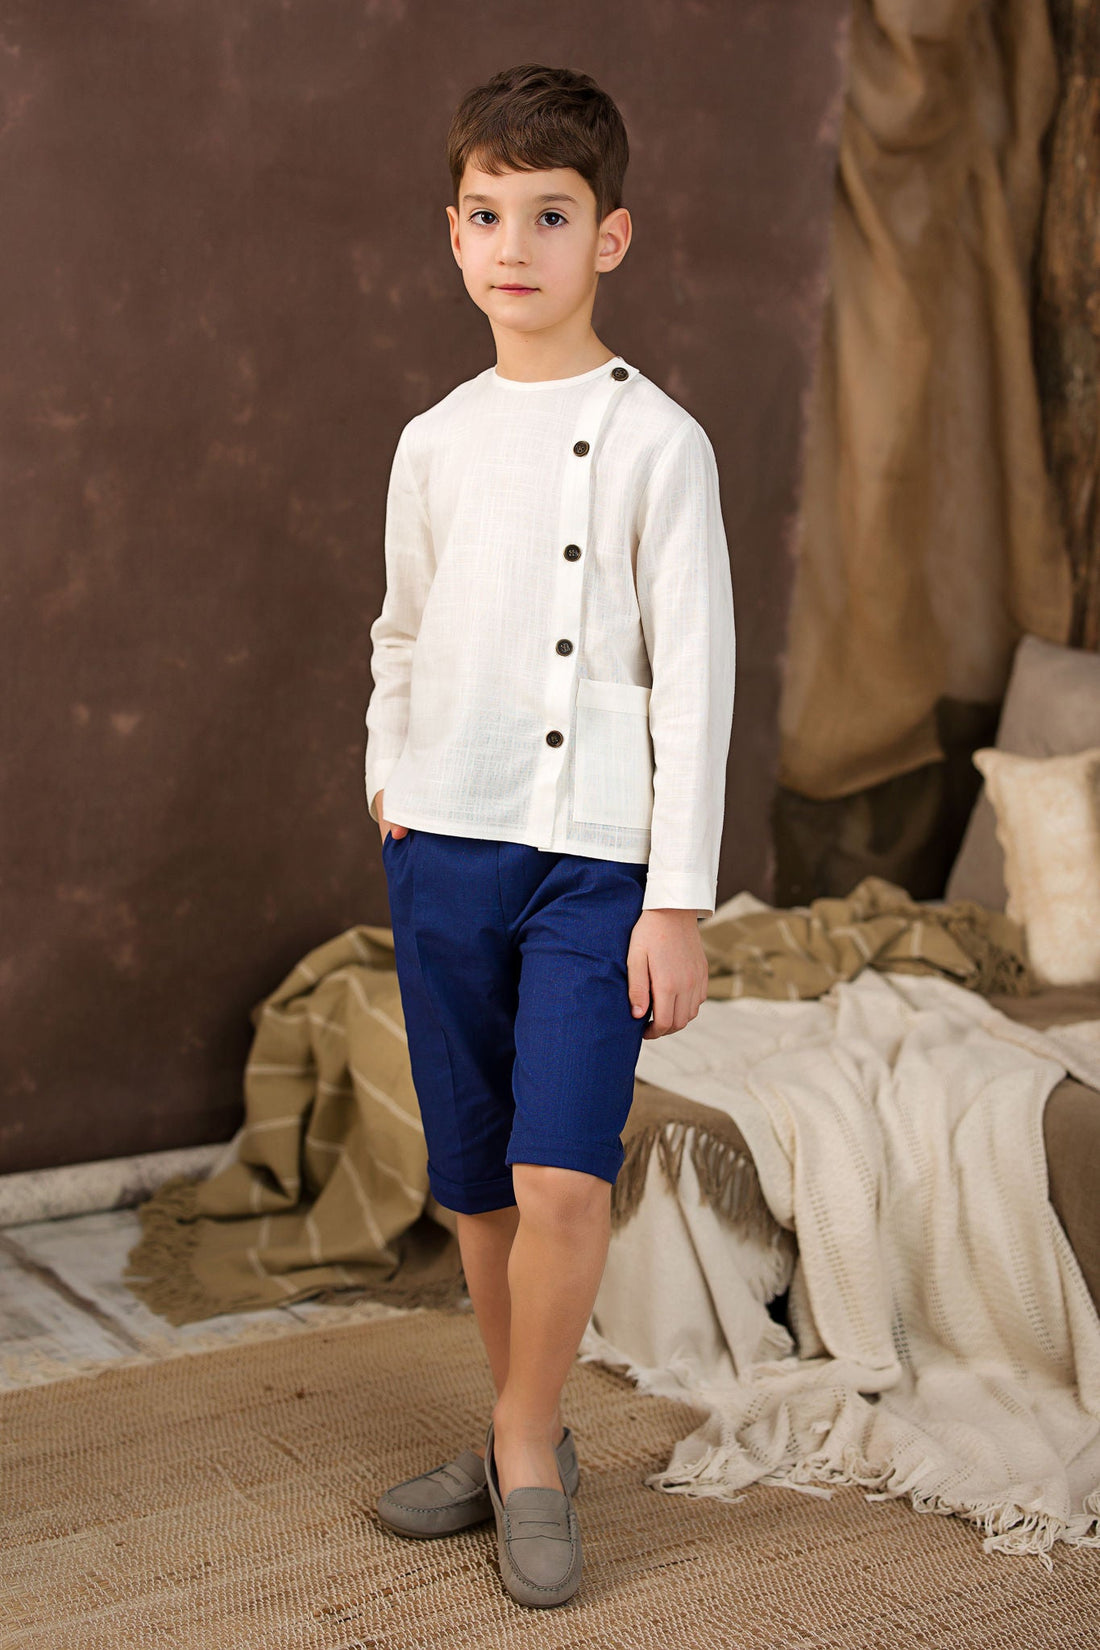 Boys White/Blue Linen 2 Piece Shirt and Shorts Se